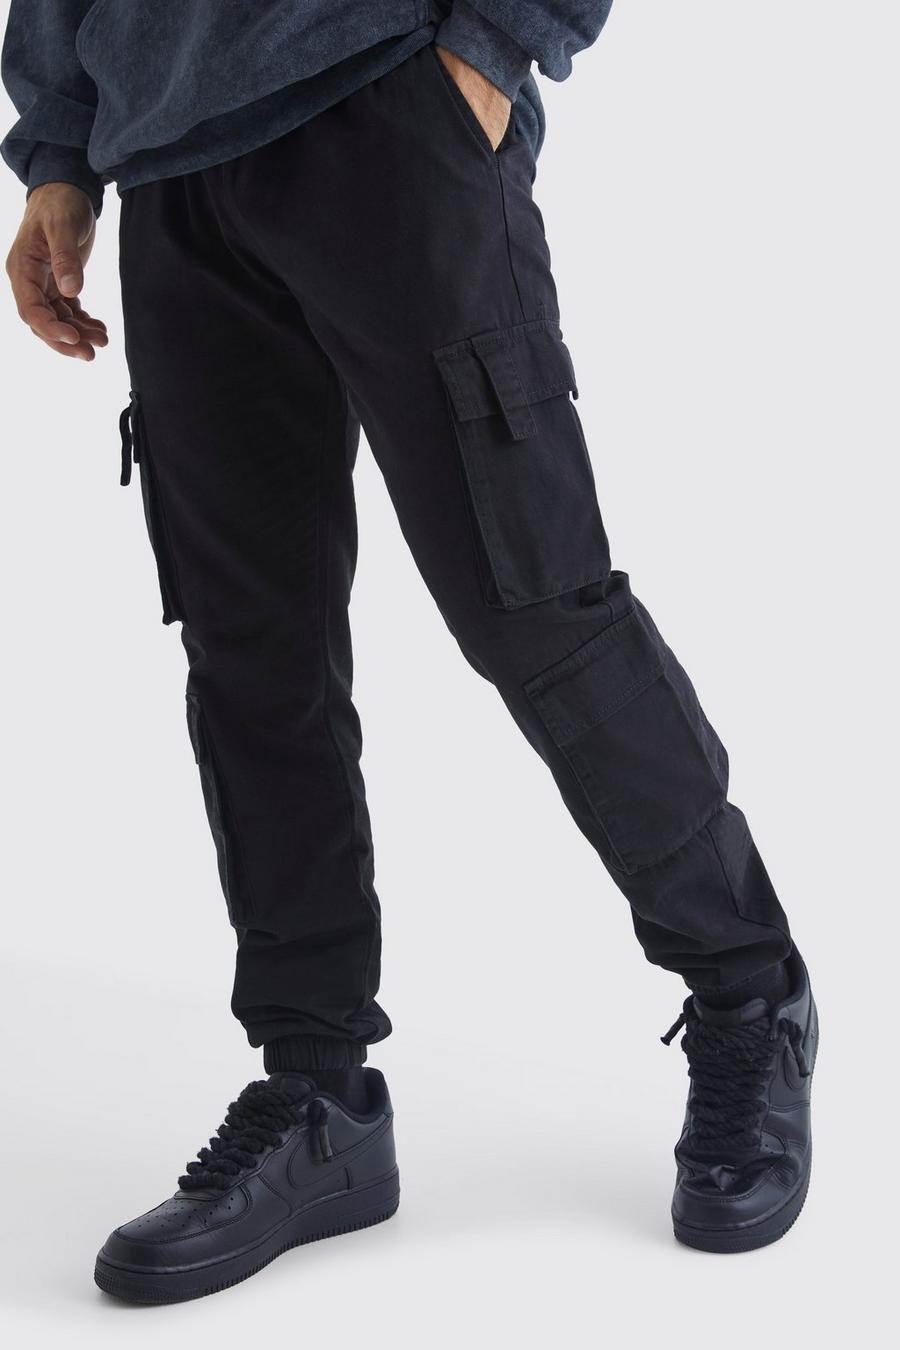 Black Elastic Waist Multi Cargo Pocket Slim Fit Sweatpant